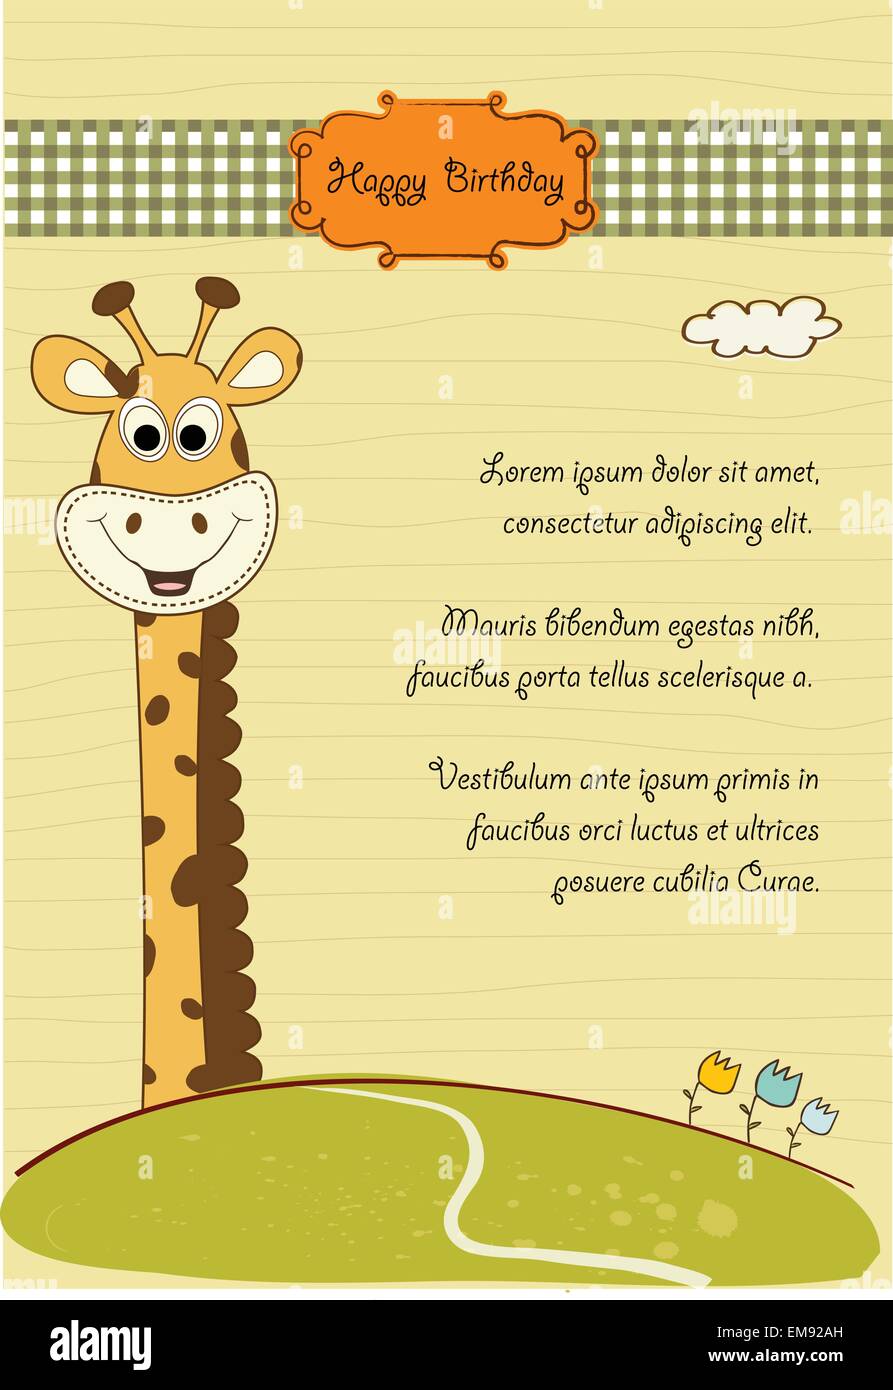 birthday greeting card with giraffe Stock Vector